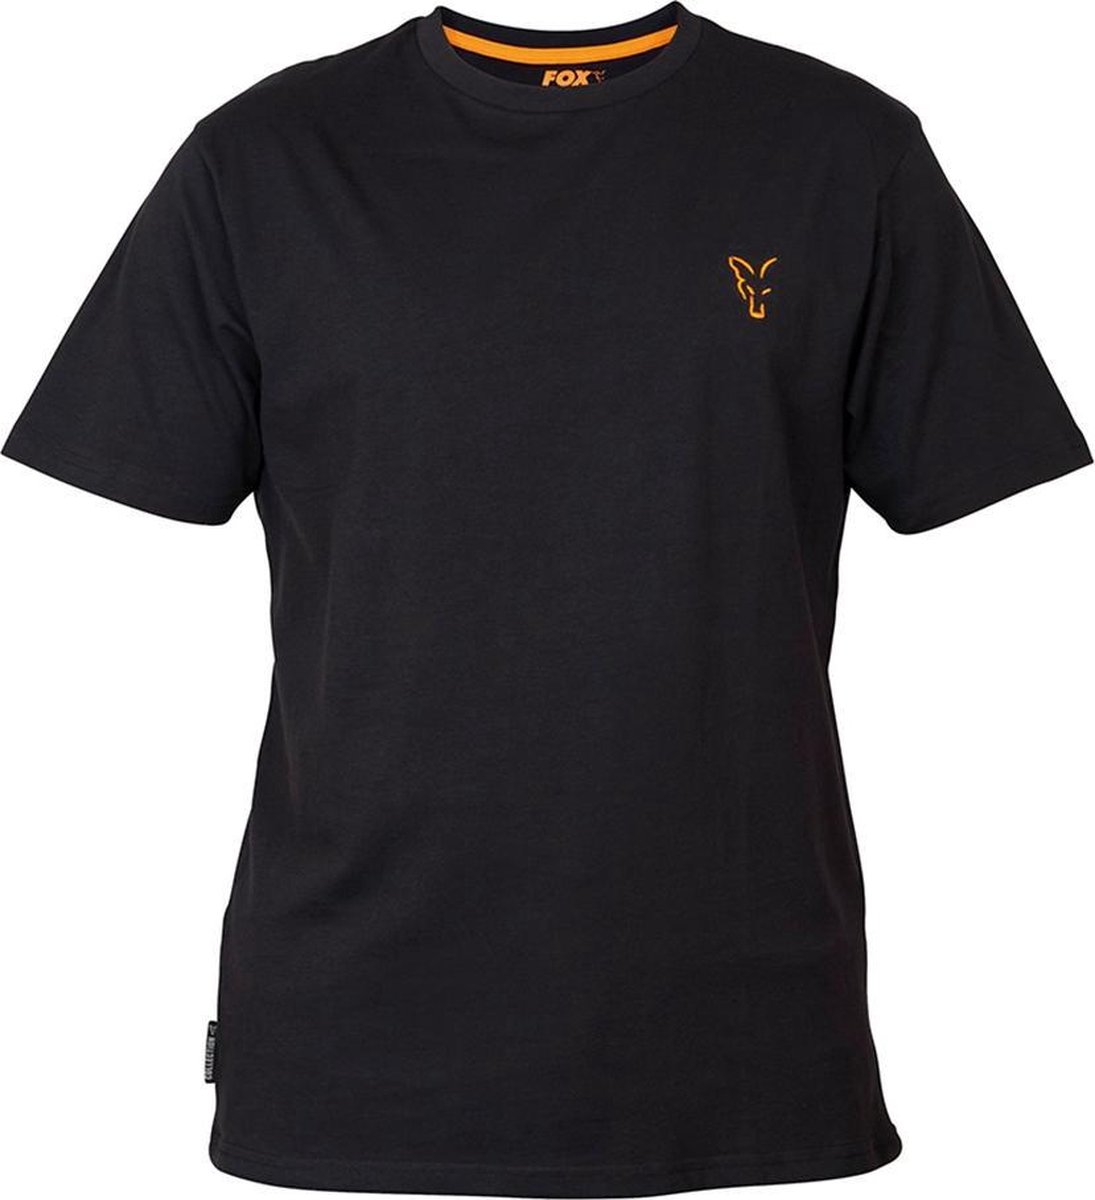 Fox Collection Black/Orange - T-Shirt - Maat S - Zwart